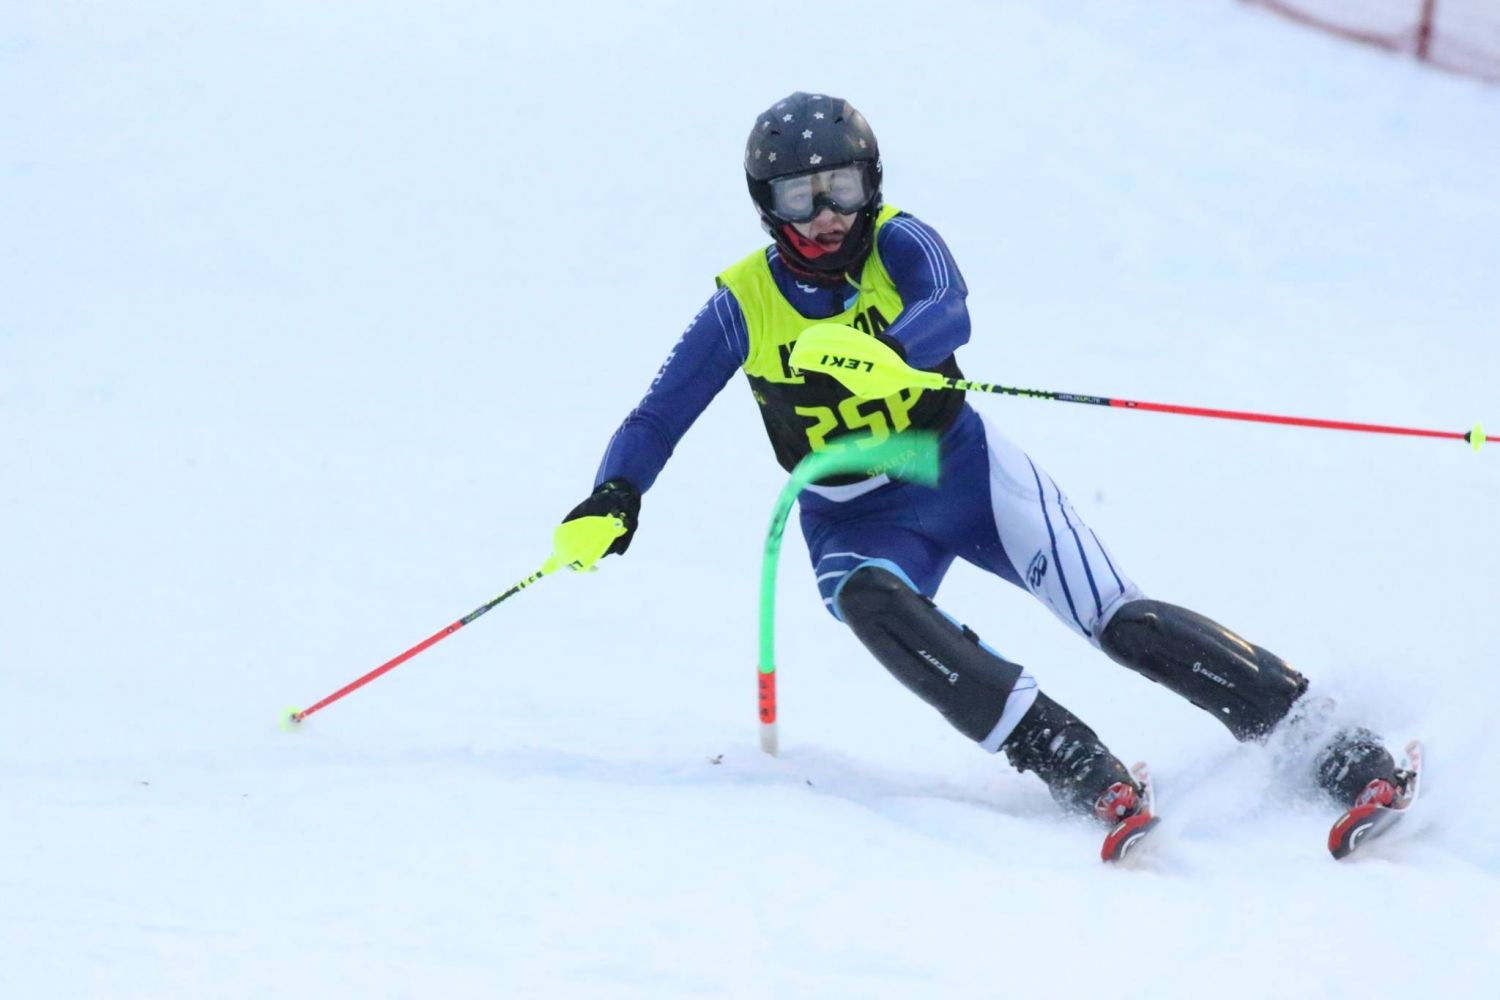 Connor - Slalom Race #2